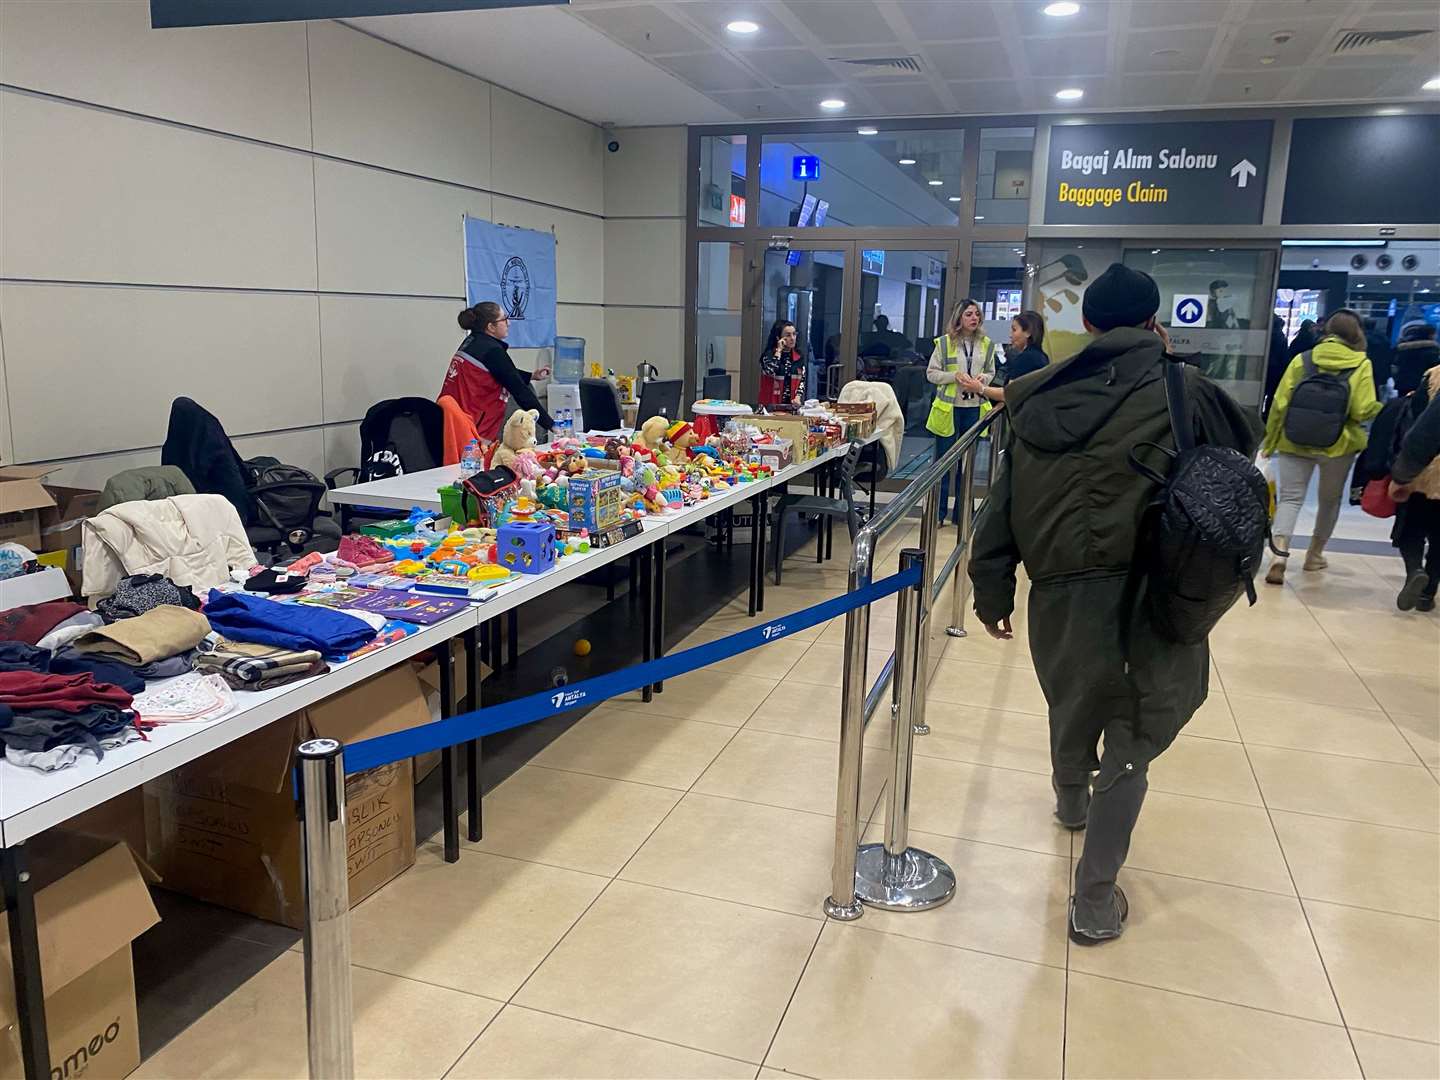 Arrival gate at Antalya airport on Sunday (Basheer Khan)